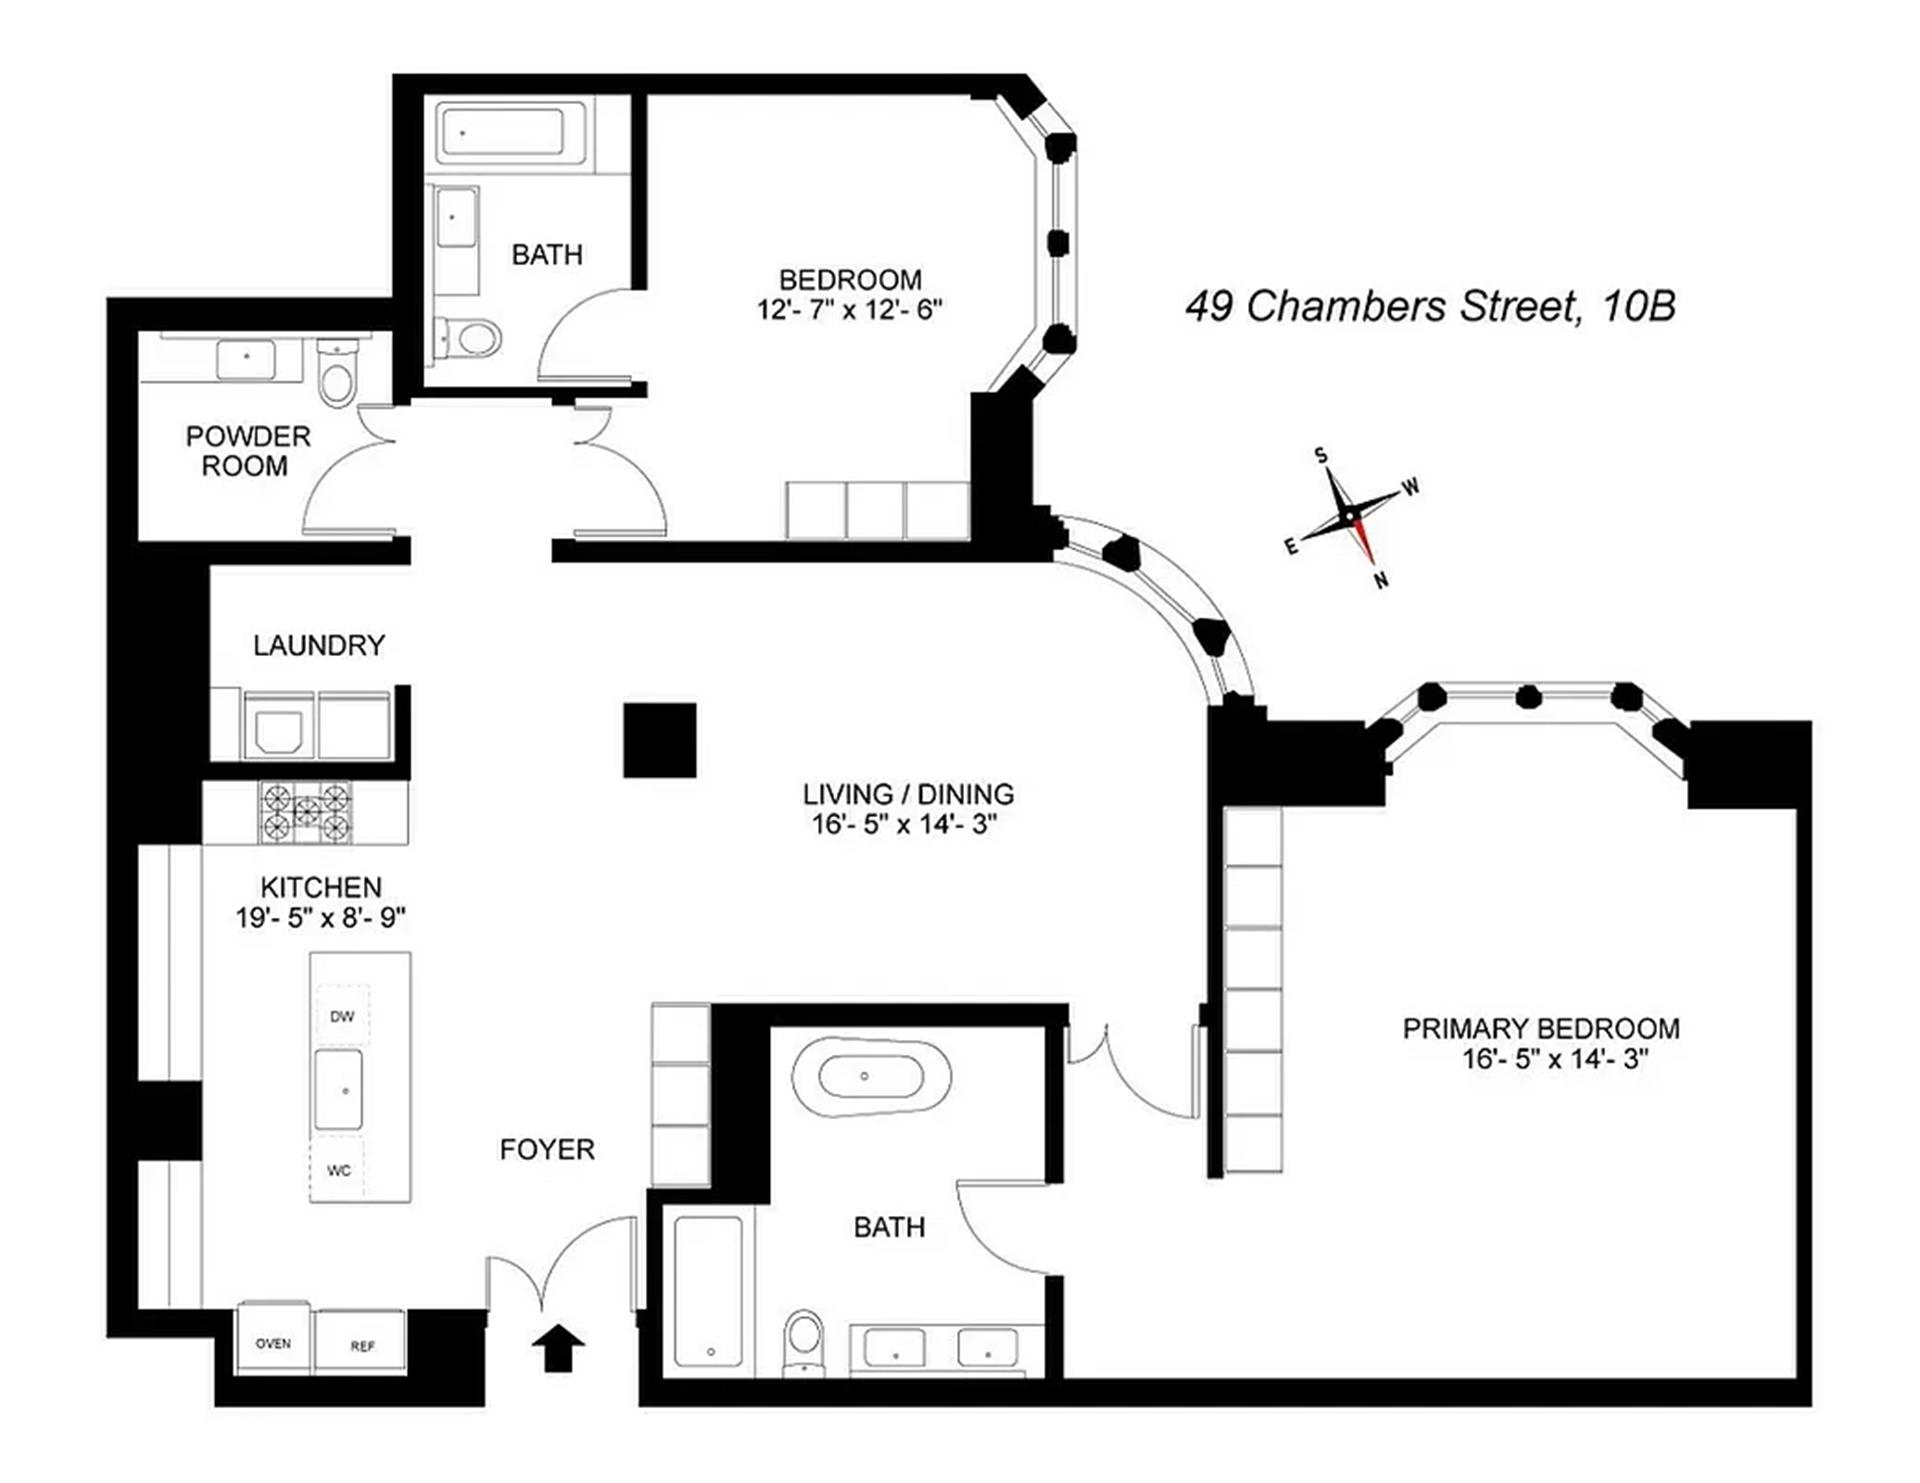 Floorplan for 49 Chambers Street, 10B